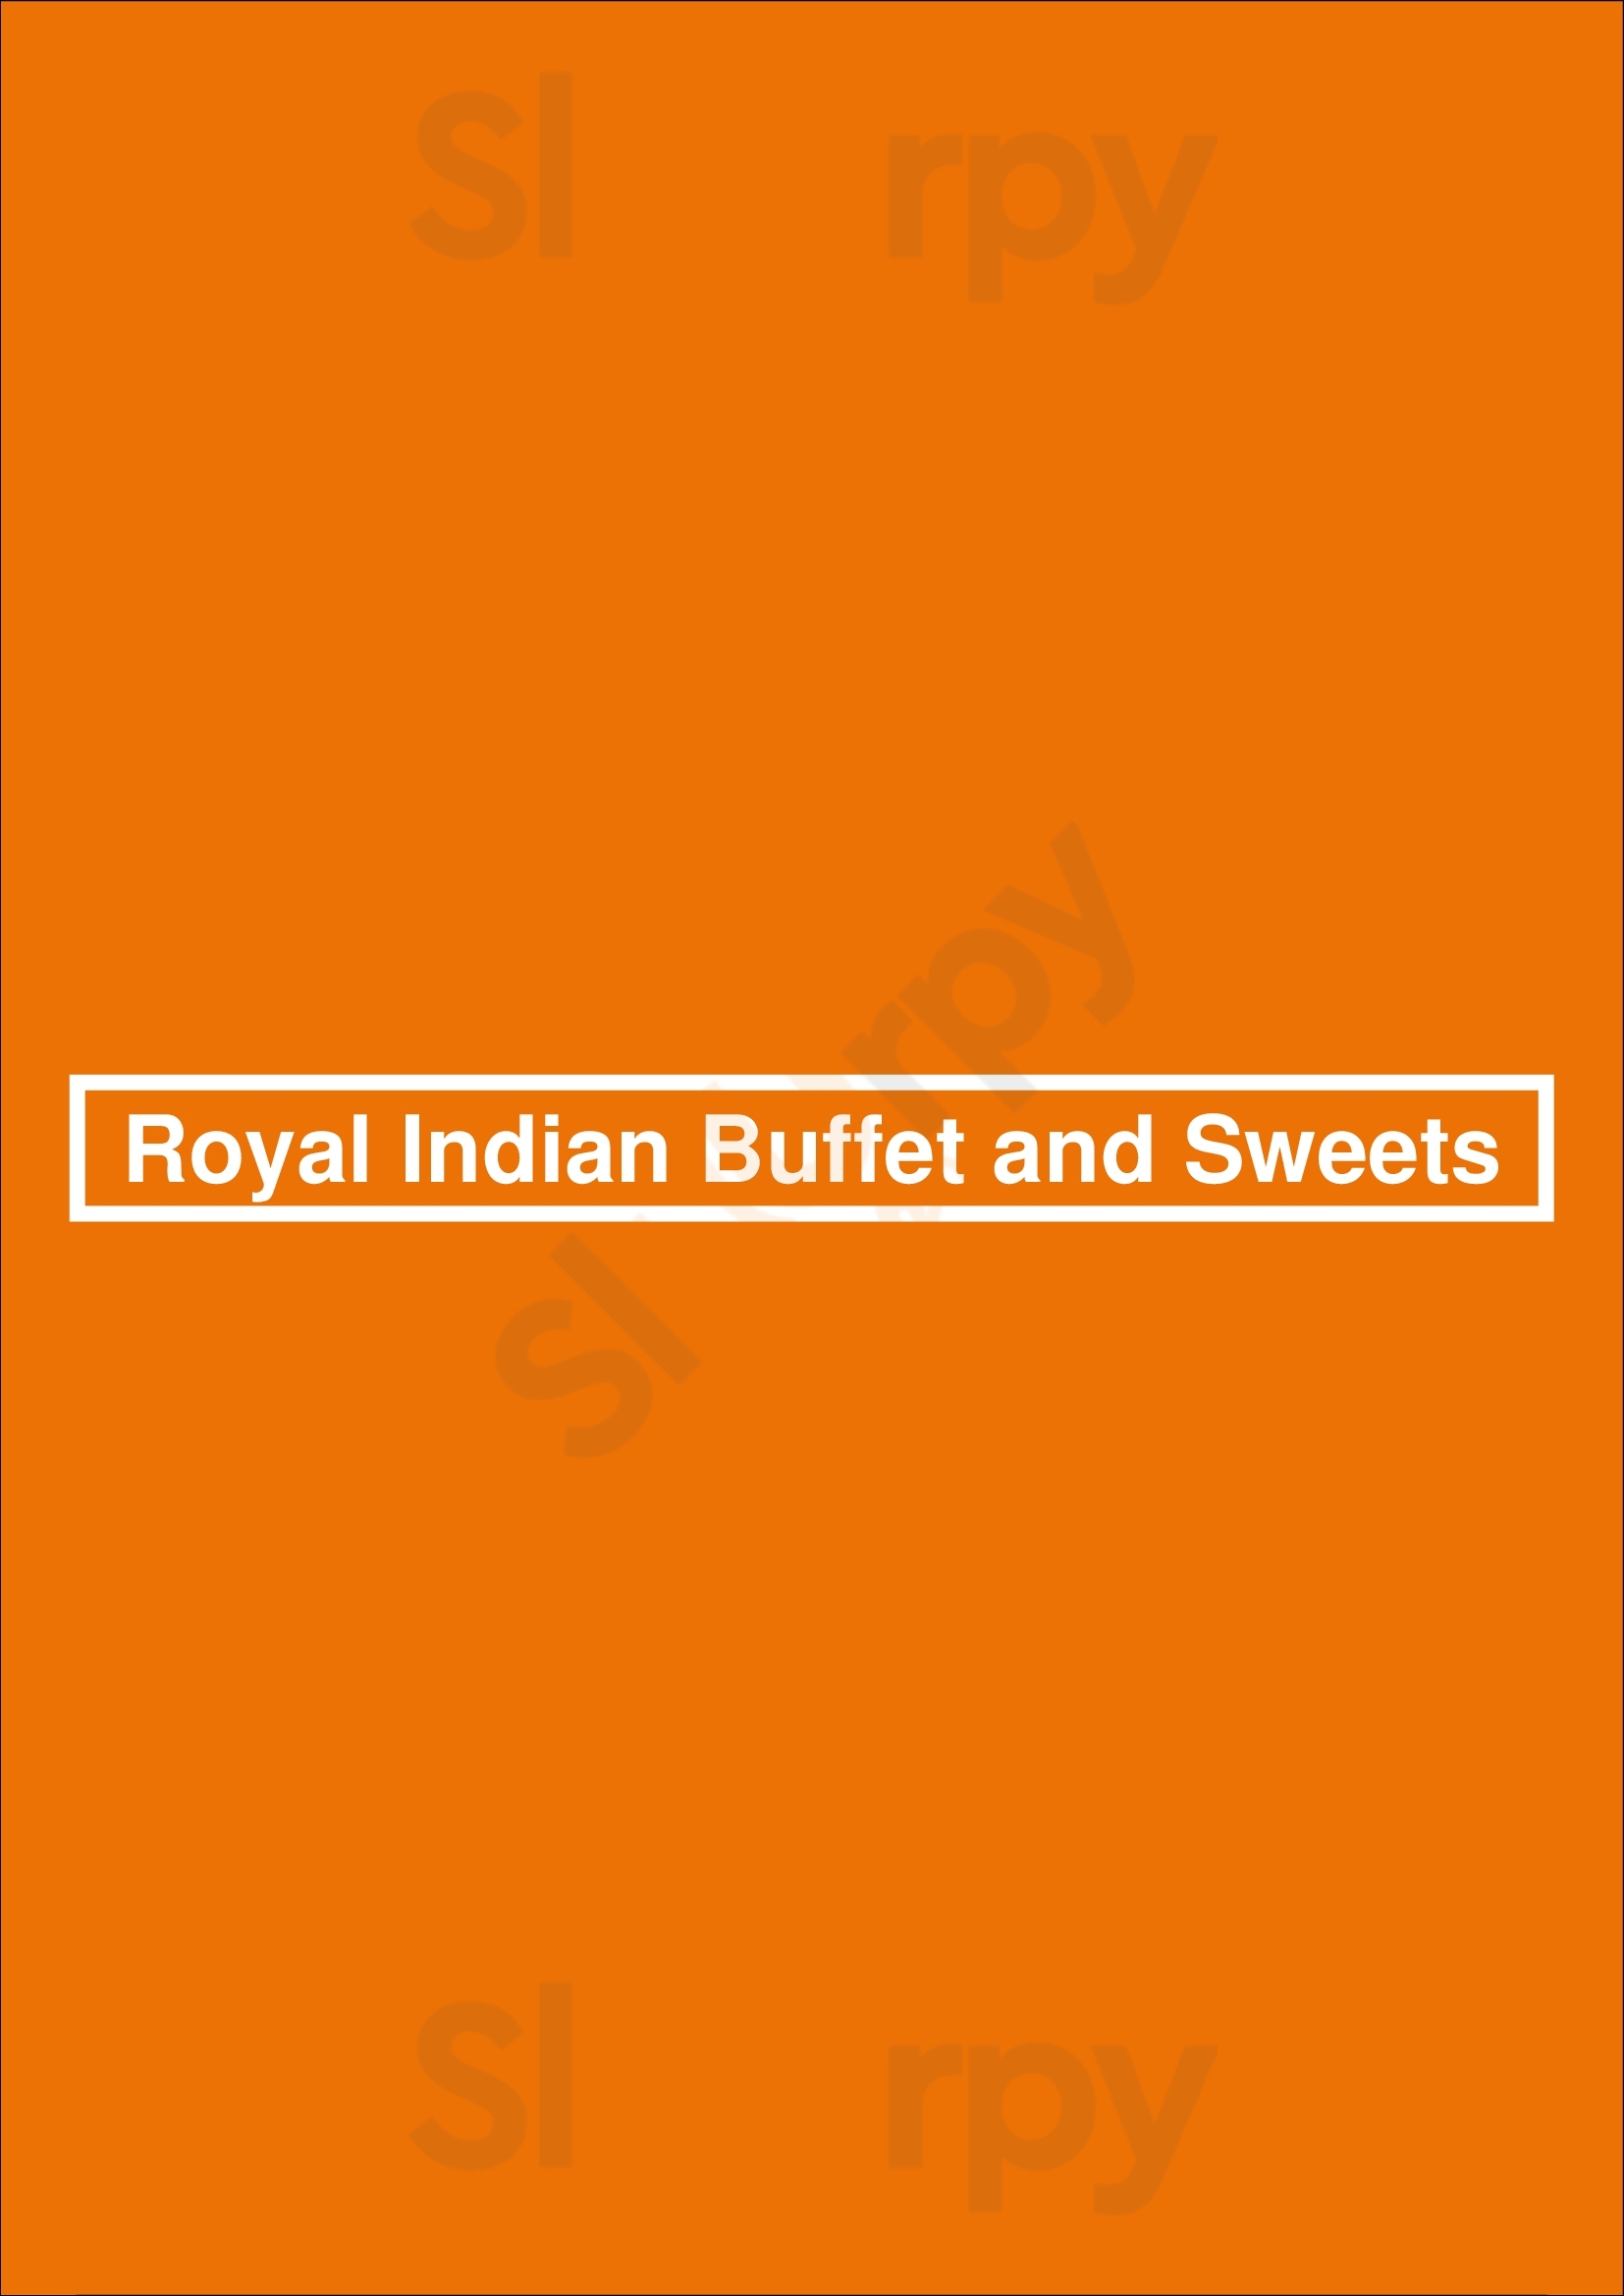 Royal Indian Buffet And Sweets Cambridge Menu - 1